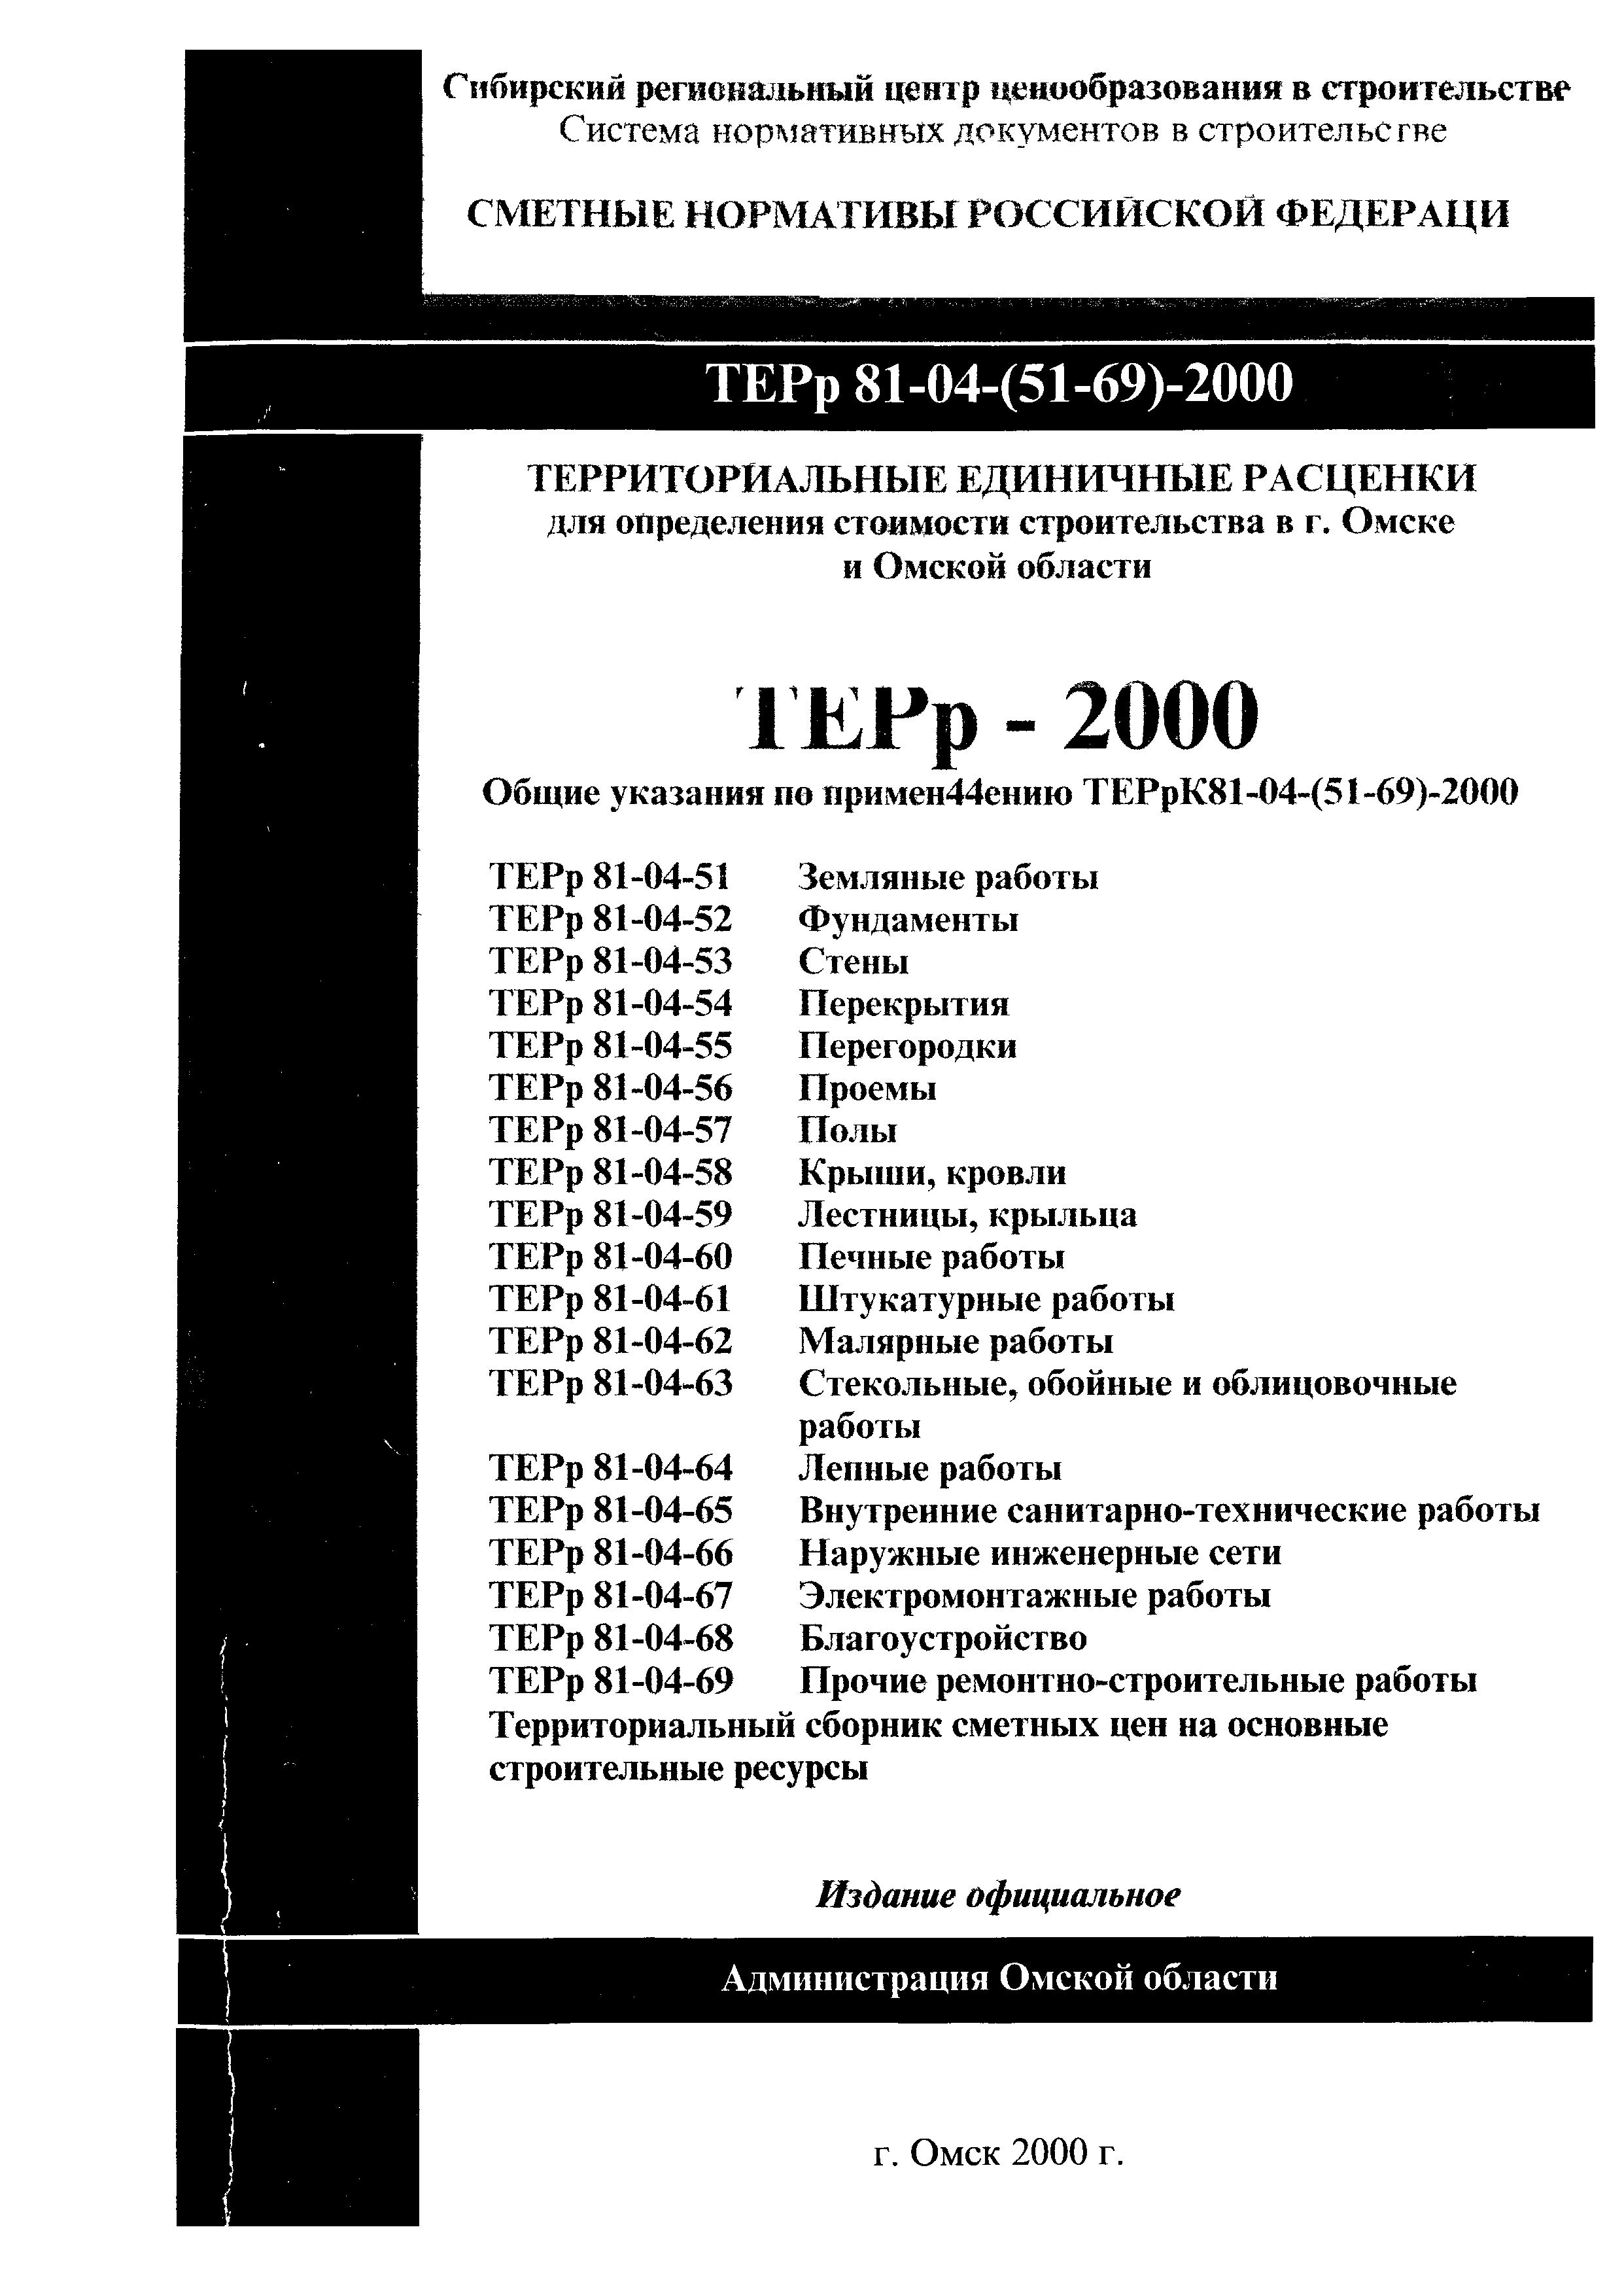 ТЕРр Омской области 2000-64